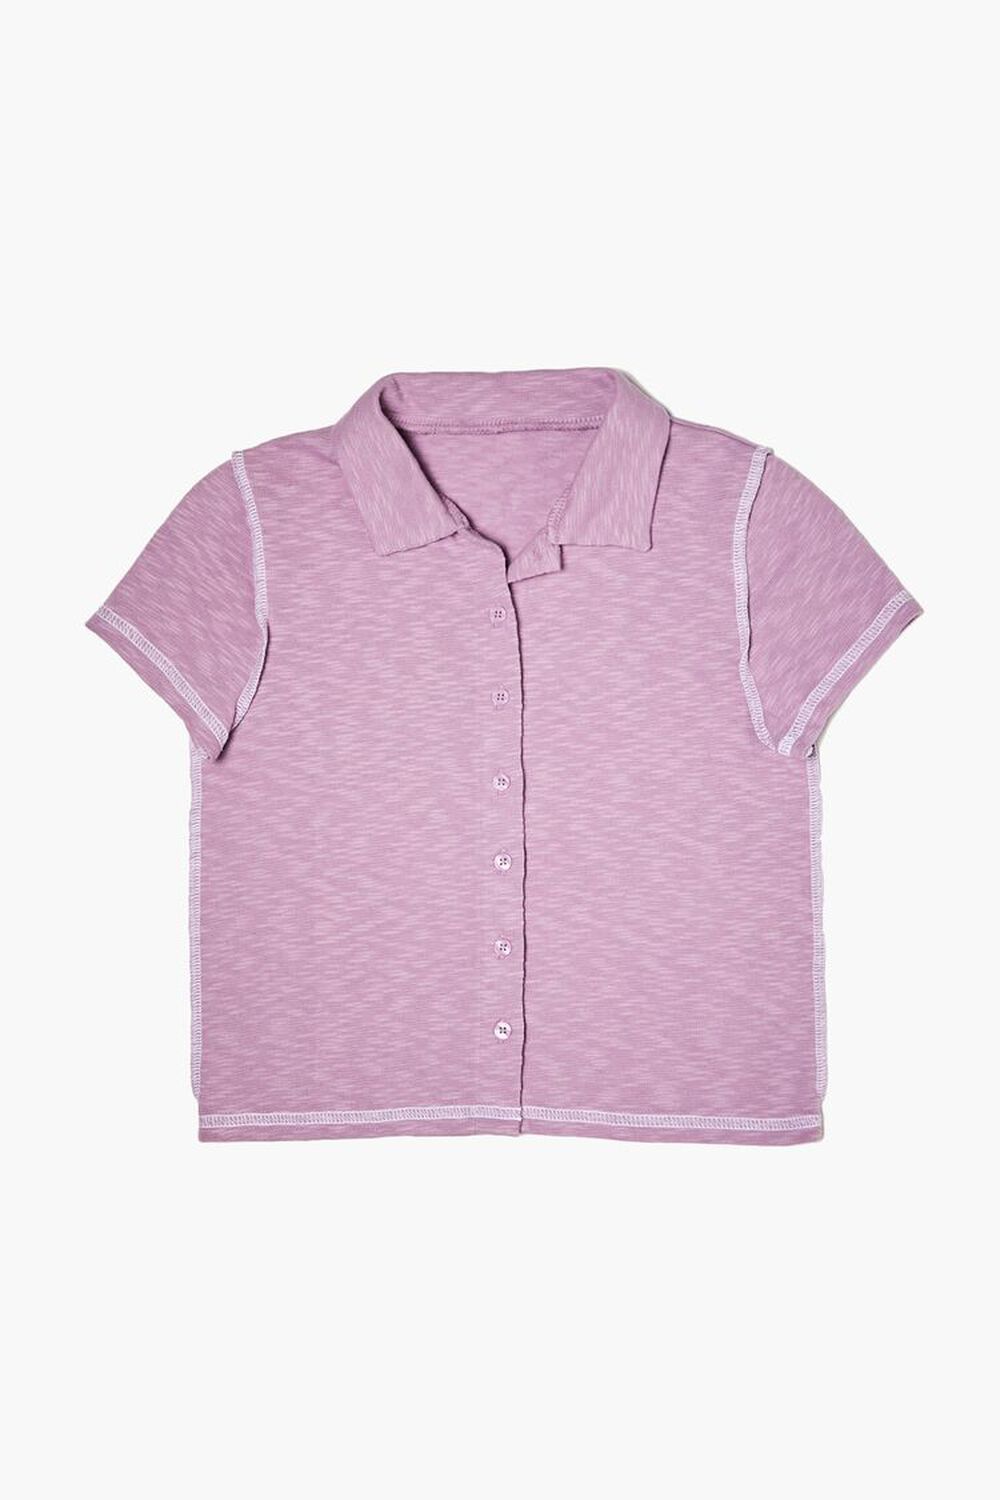 LAVENDER Girls Button-Front Shirt (Kids), image 1